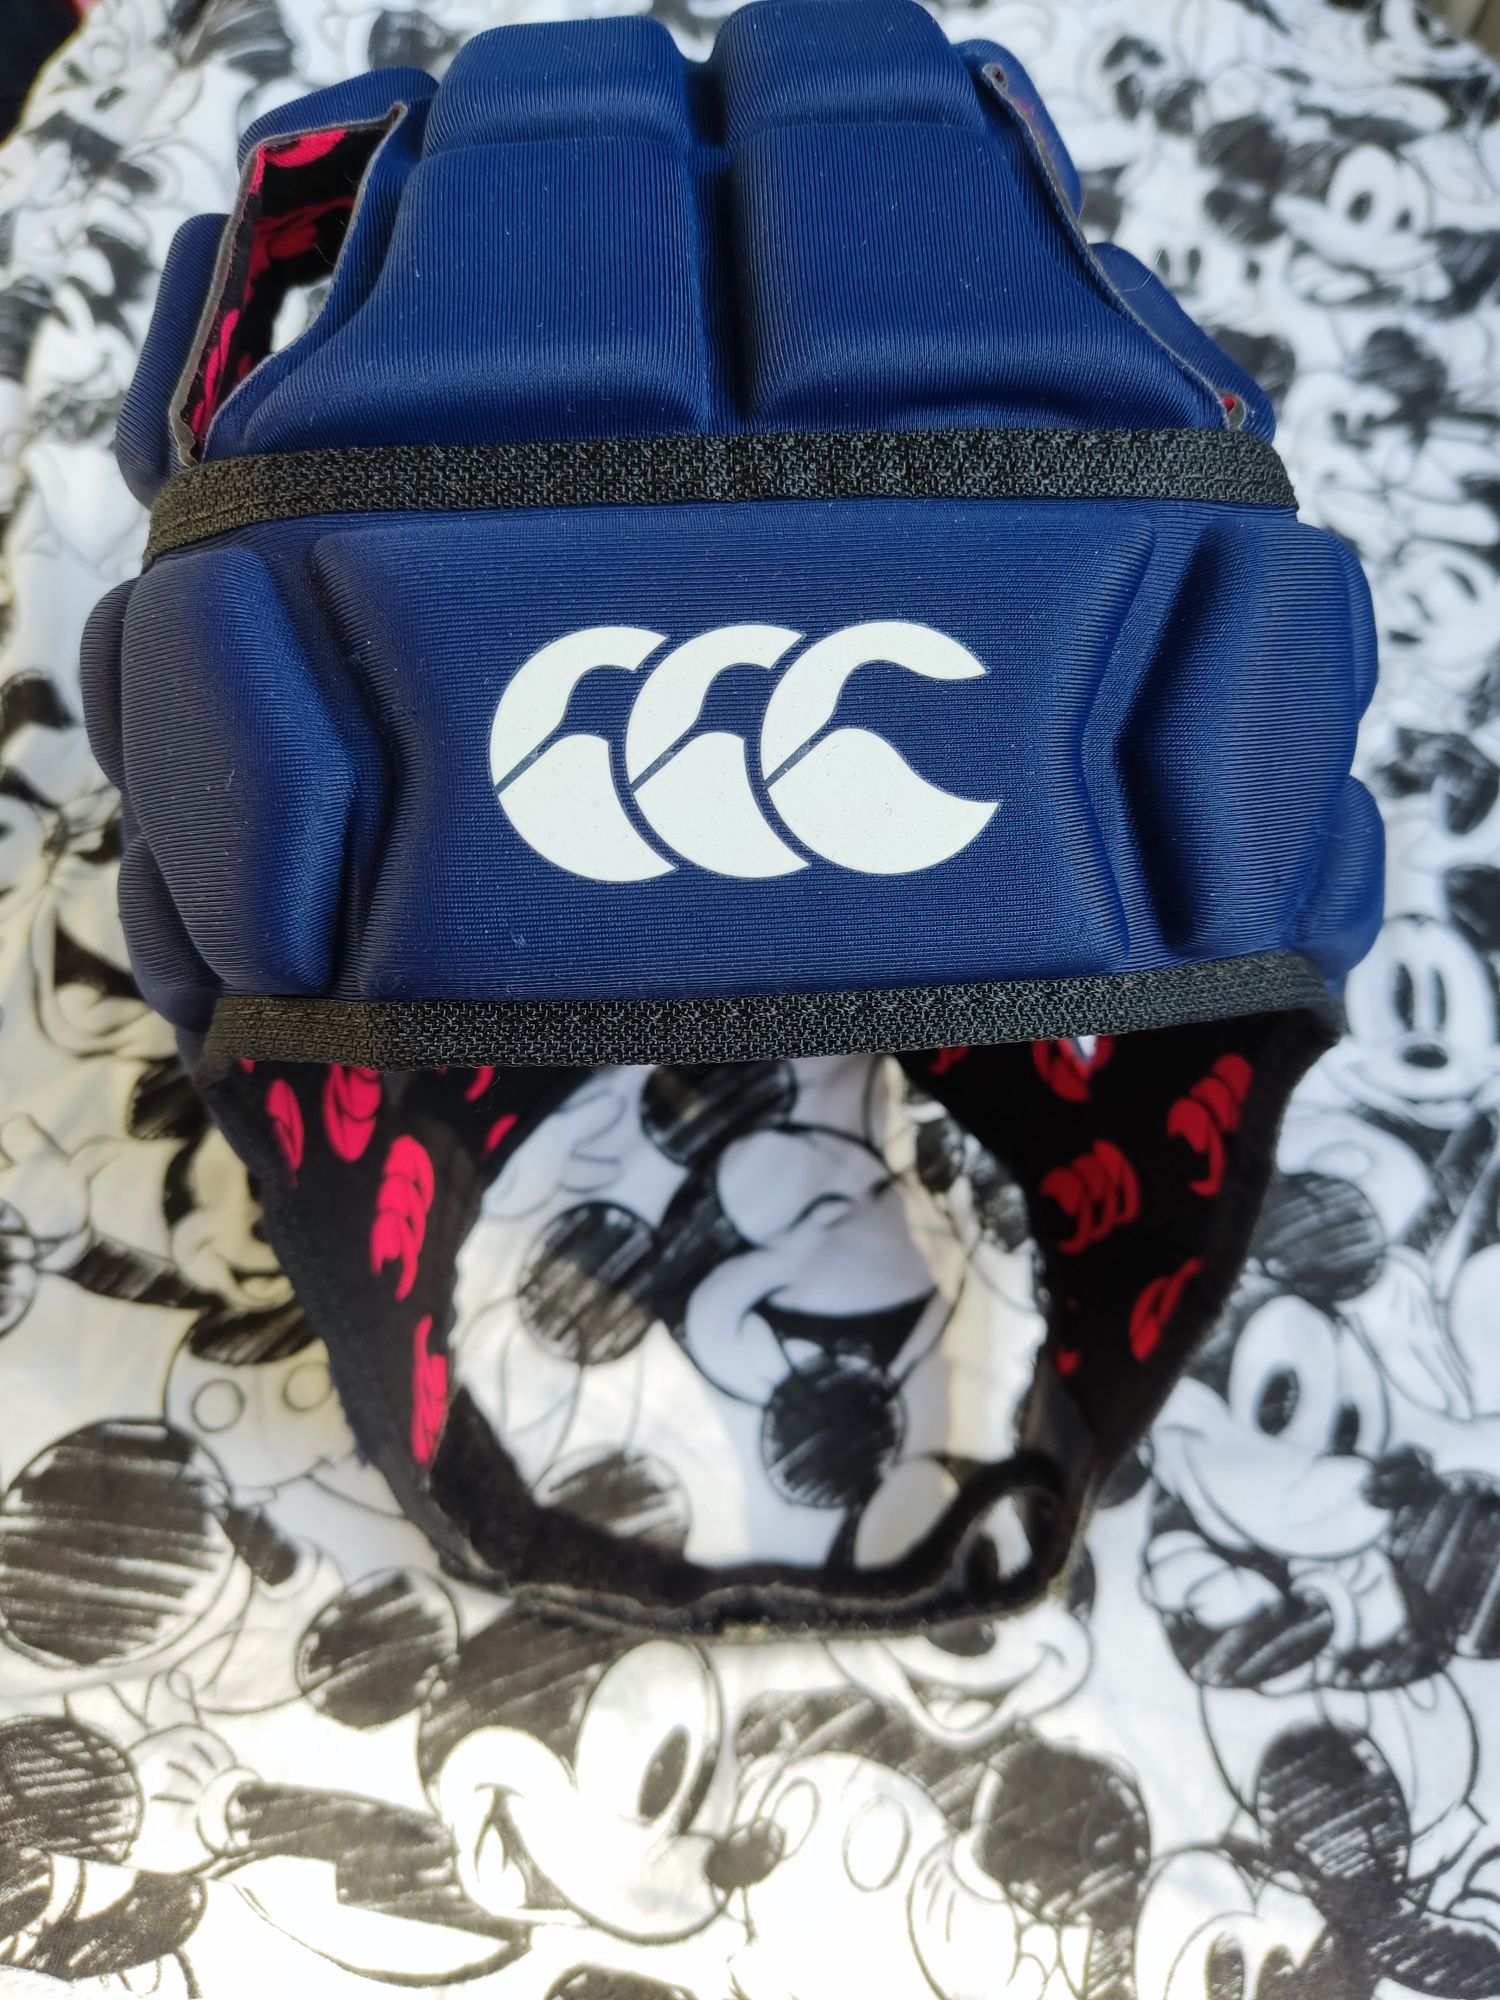 Kask canterbury CCC rugby rozmiar L